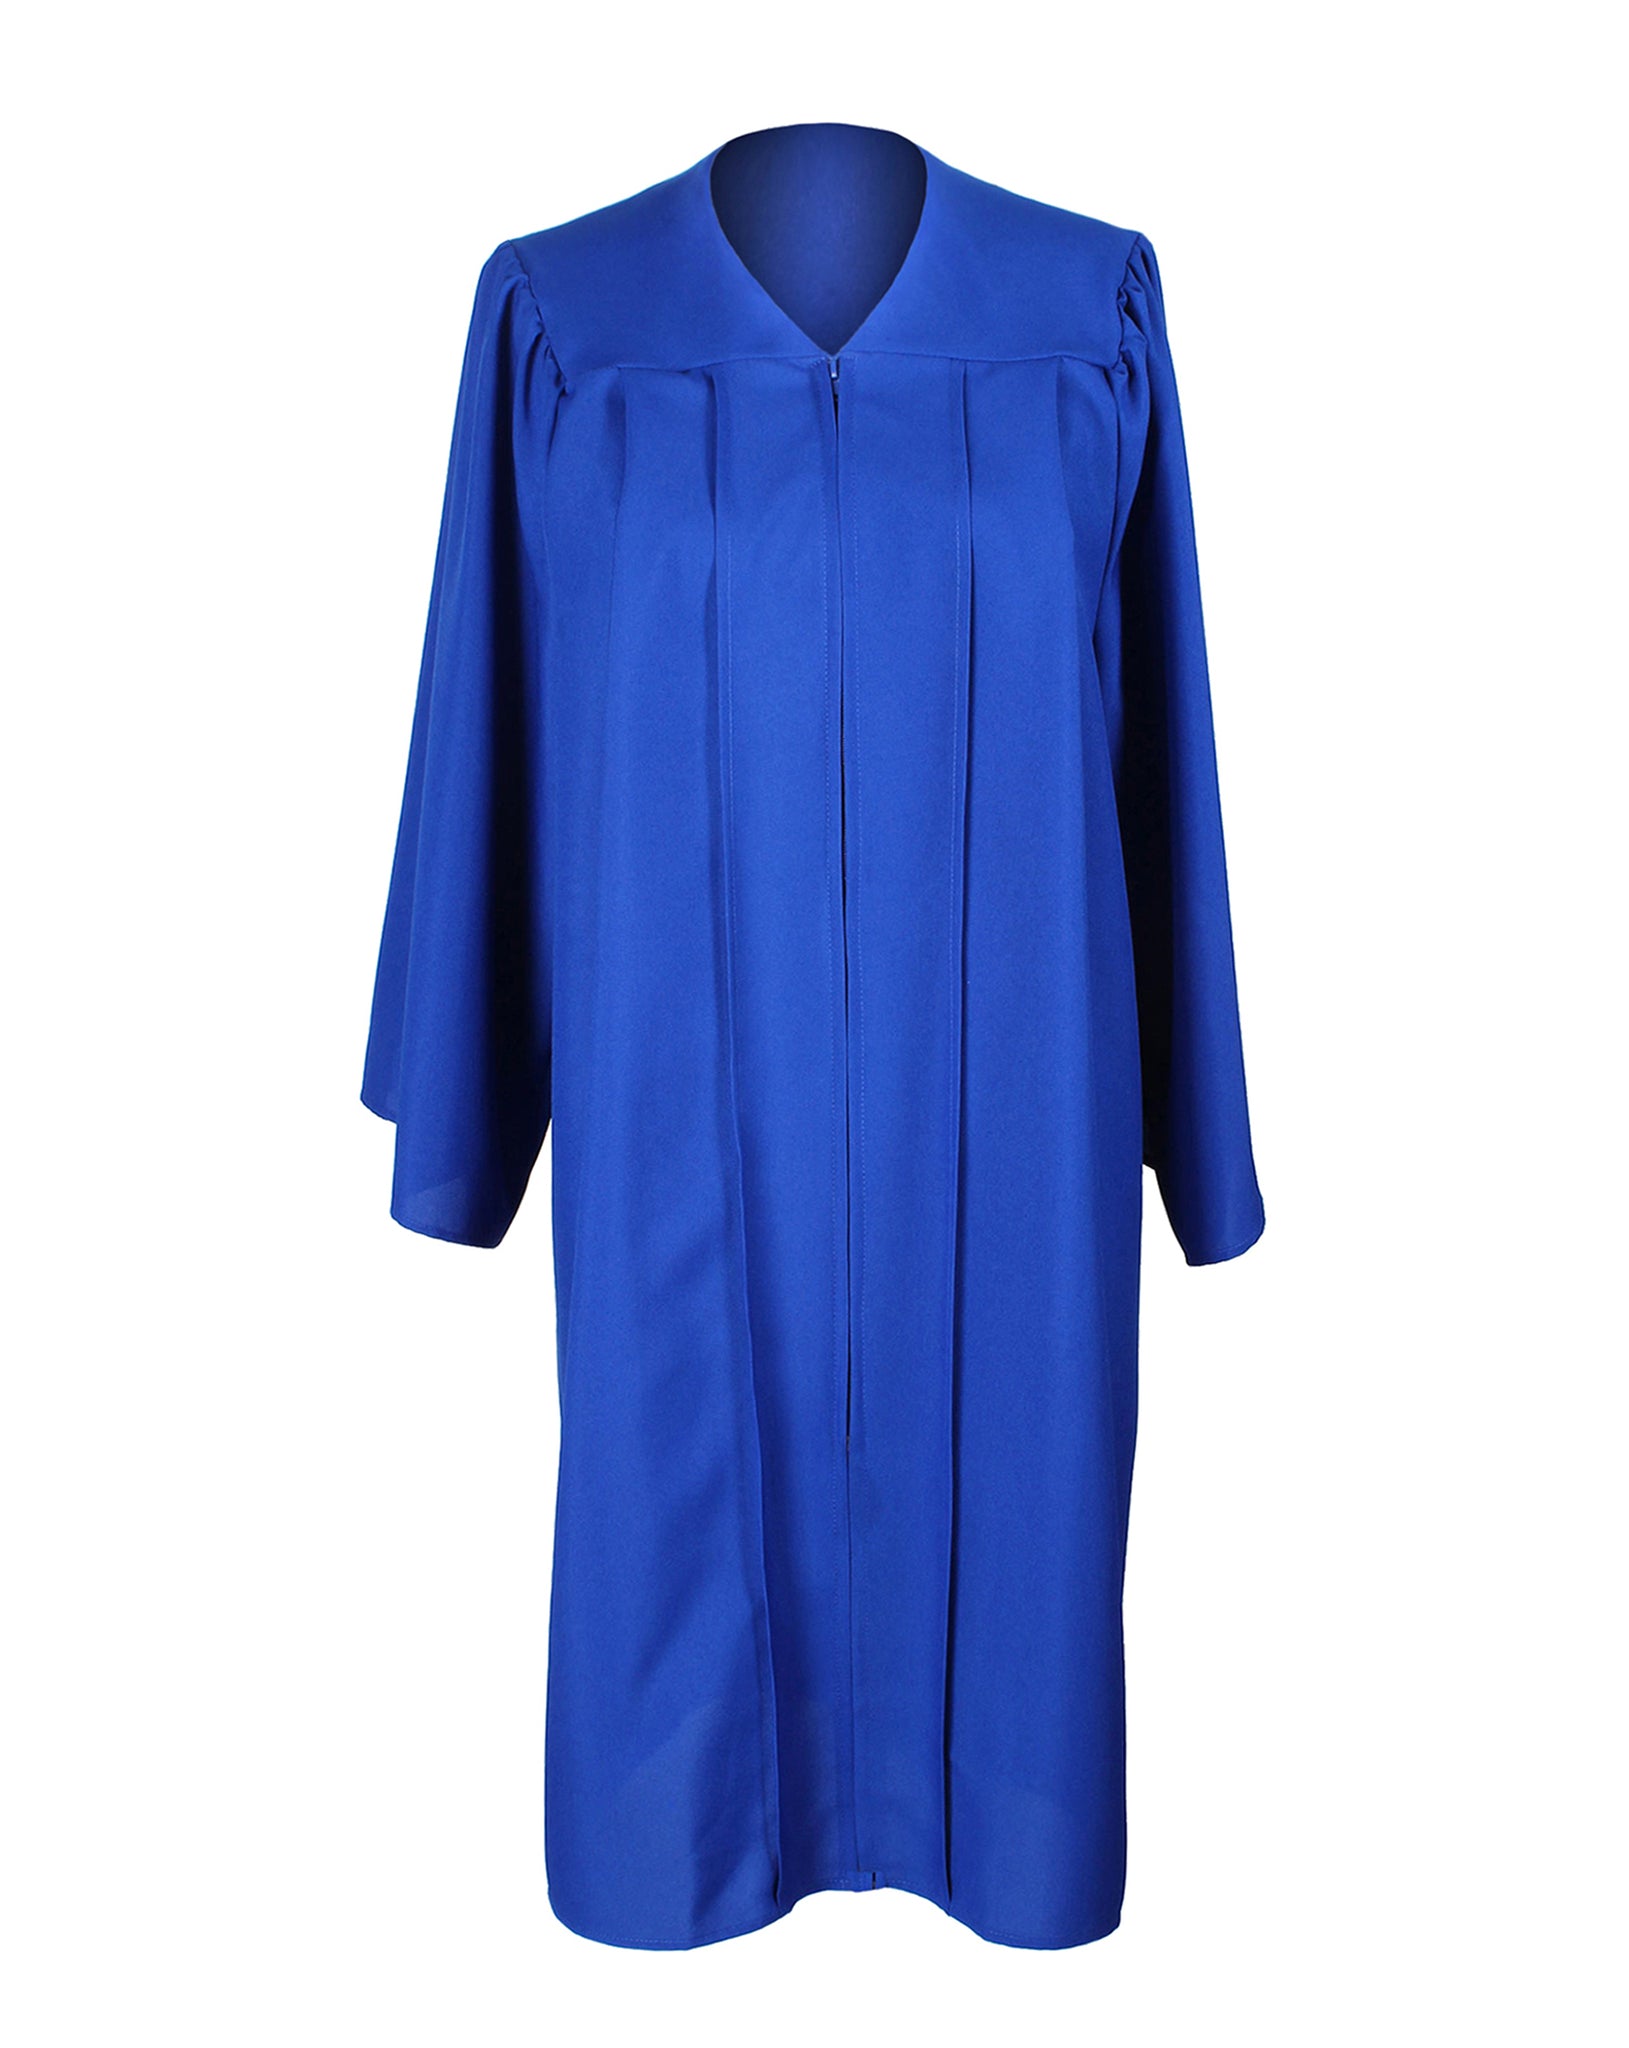 Unisex  Matte Graduation Gown|Choir Robe for Church|Cosplay Costume （Royal Blue）